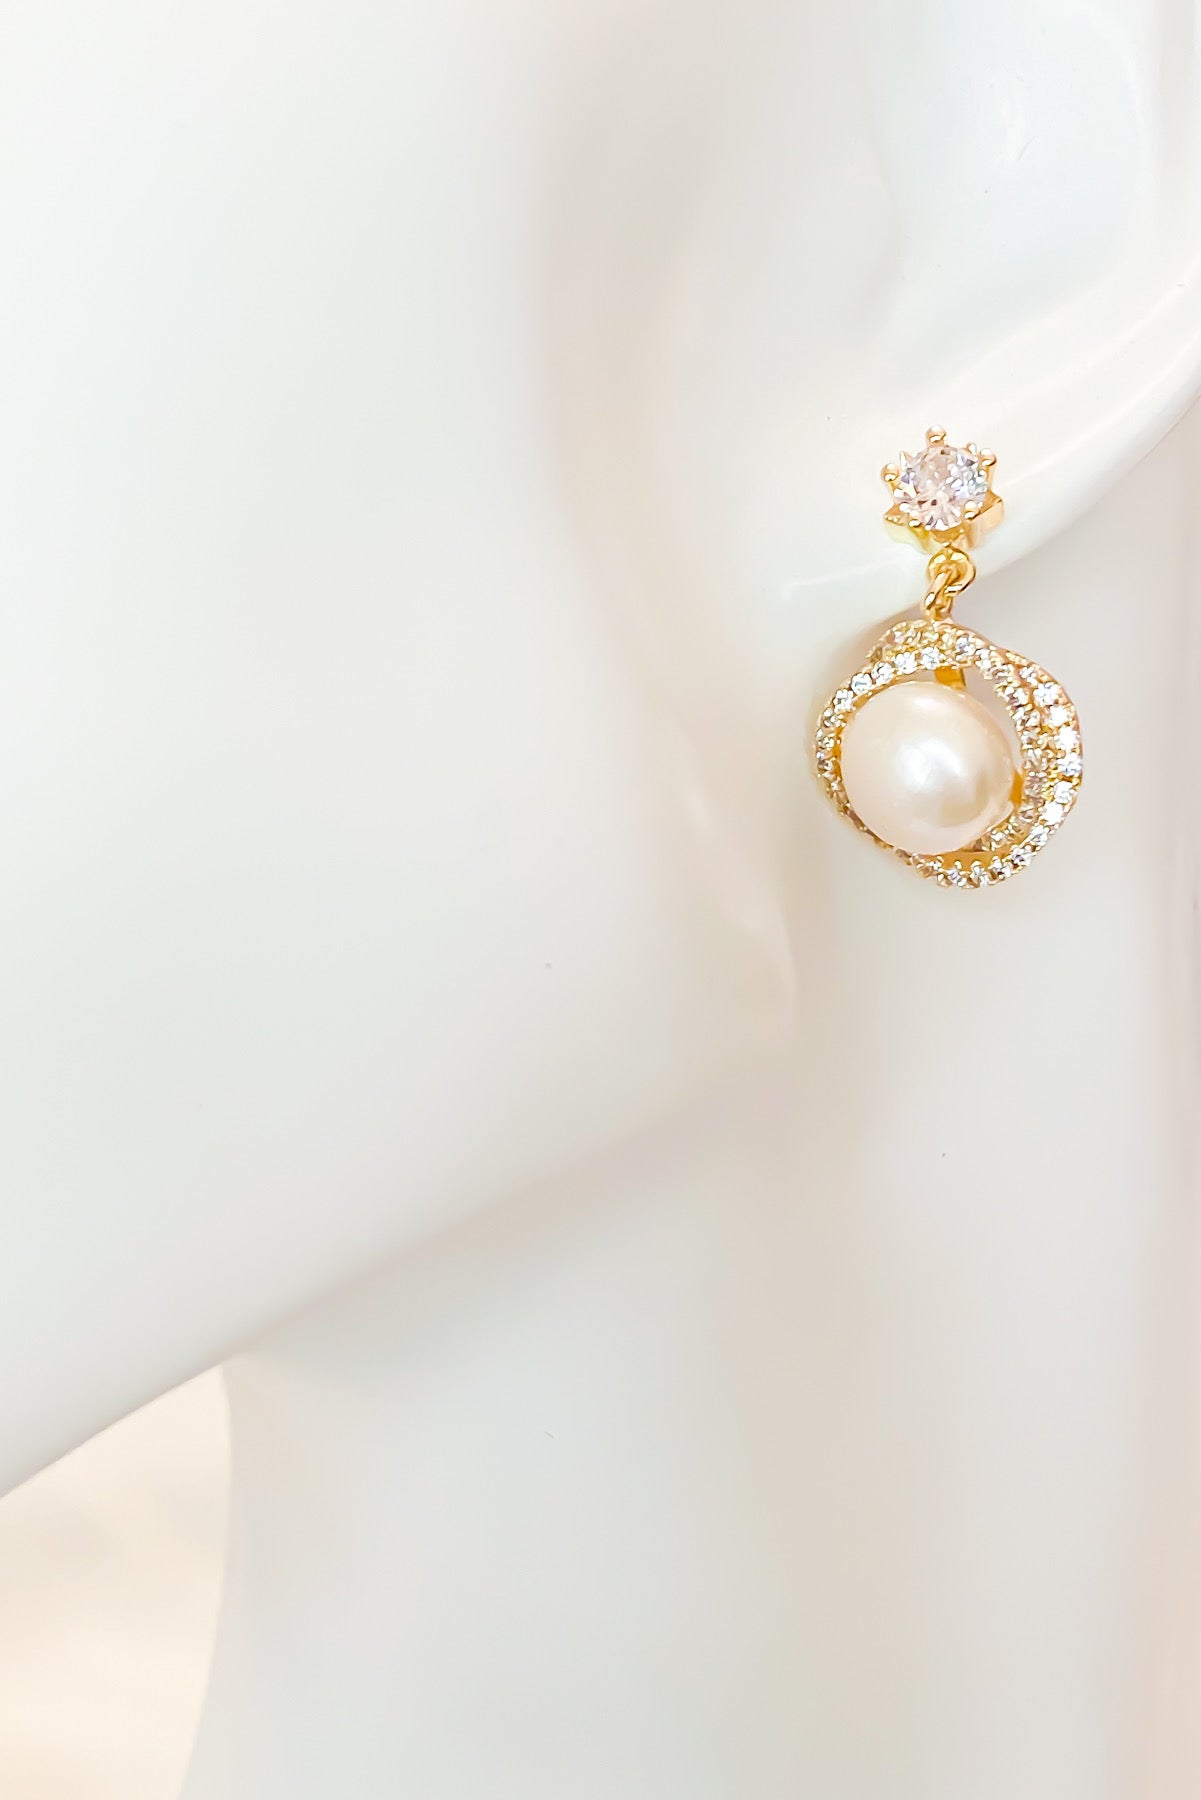 SKYE San Francisco Shop SF Chic Modern Elegant Classy Women Jewelry French Parisian Minimalist Alexandrine 18K Gold Crystal Pearl Earrings 8